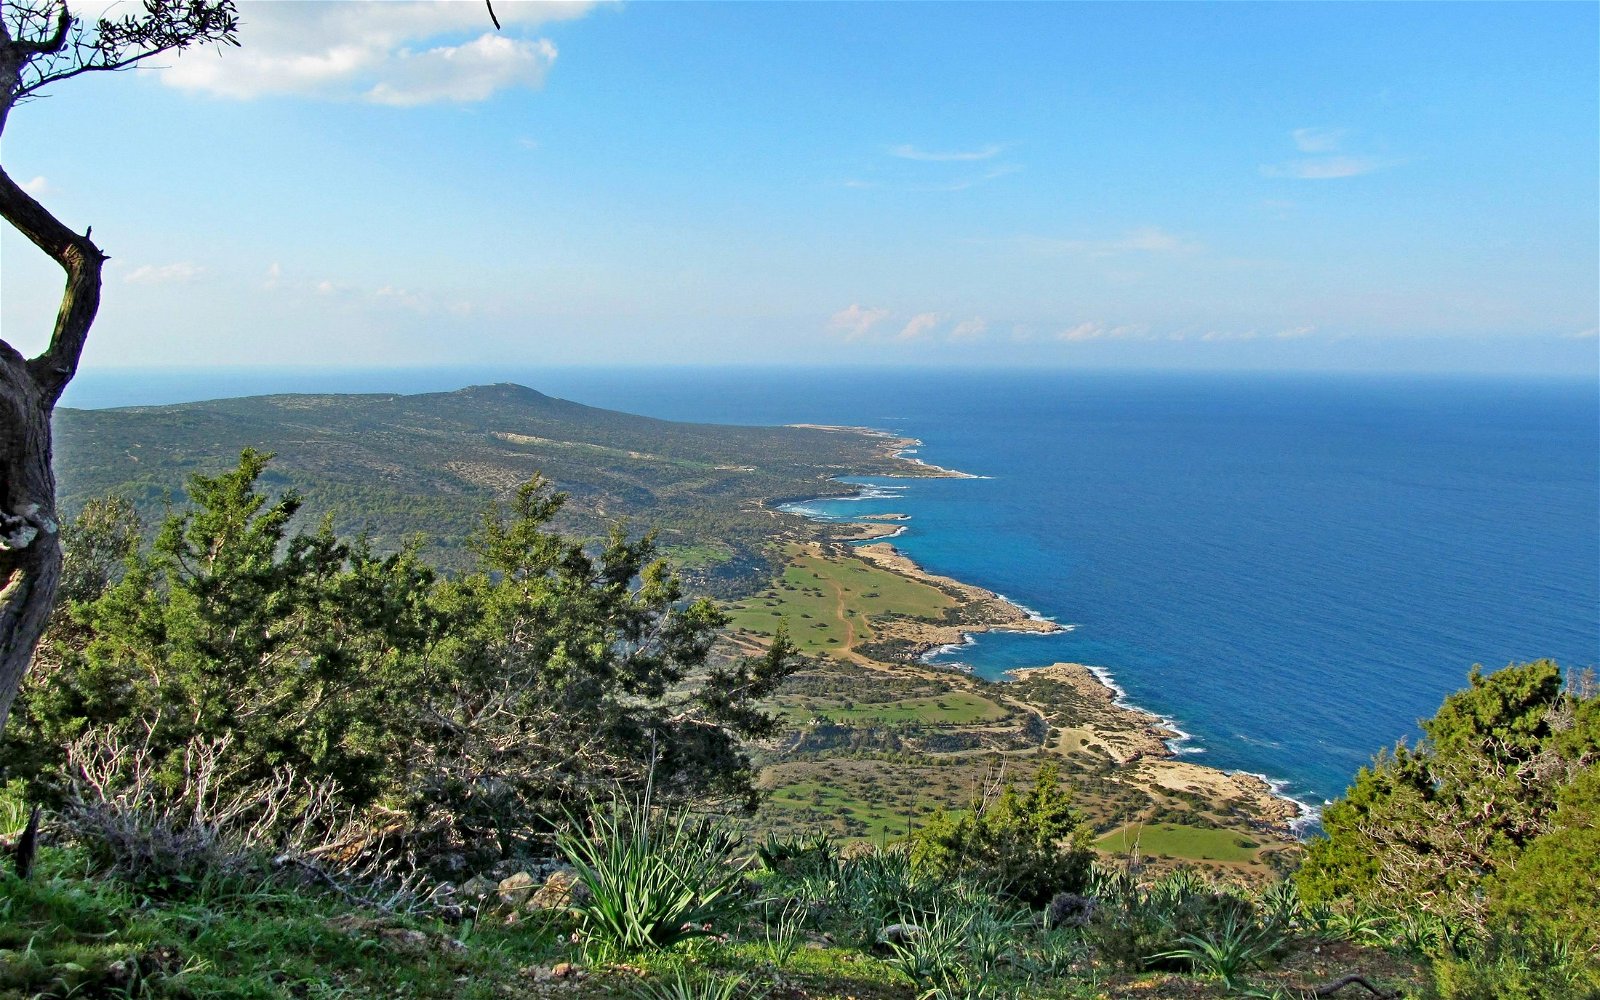 Holidays to Greece, Greek Islands, Cyprus & beyond - ABTA & ATOL Protected